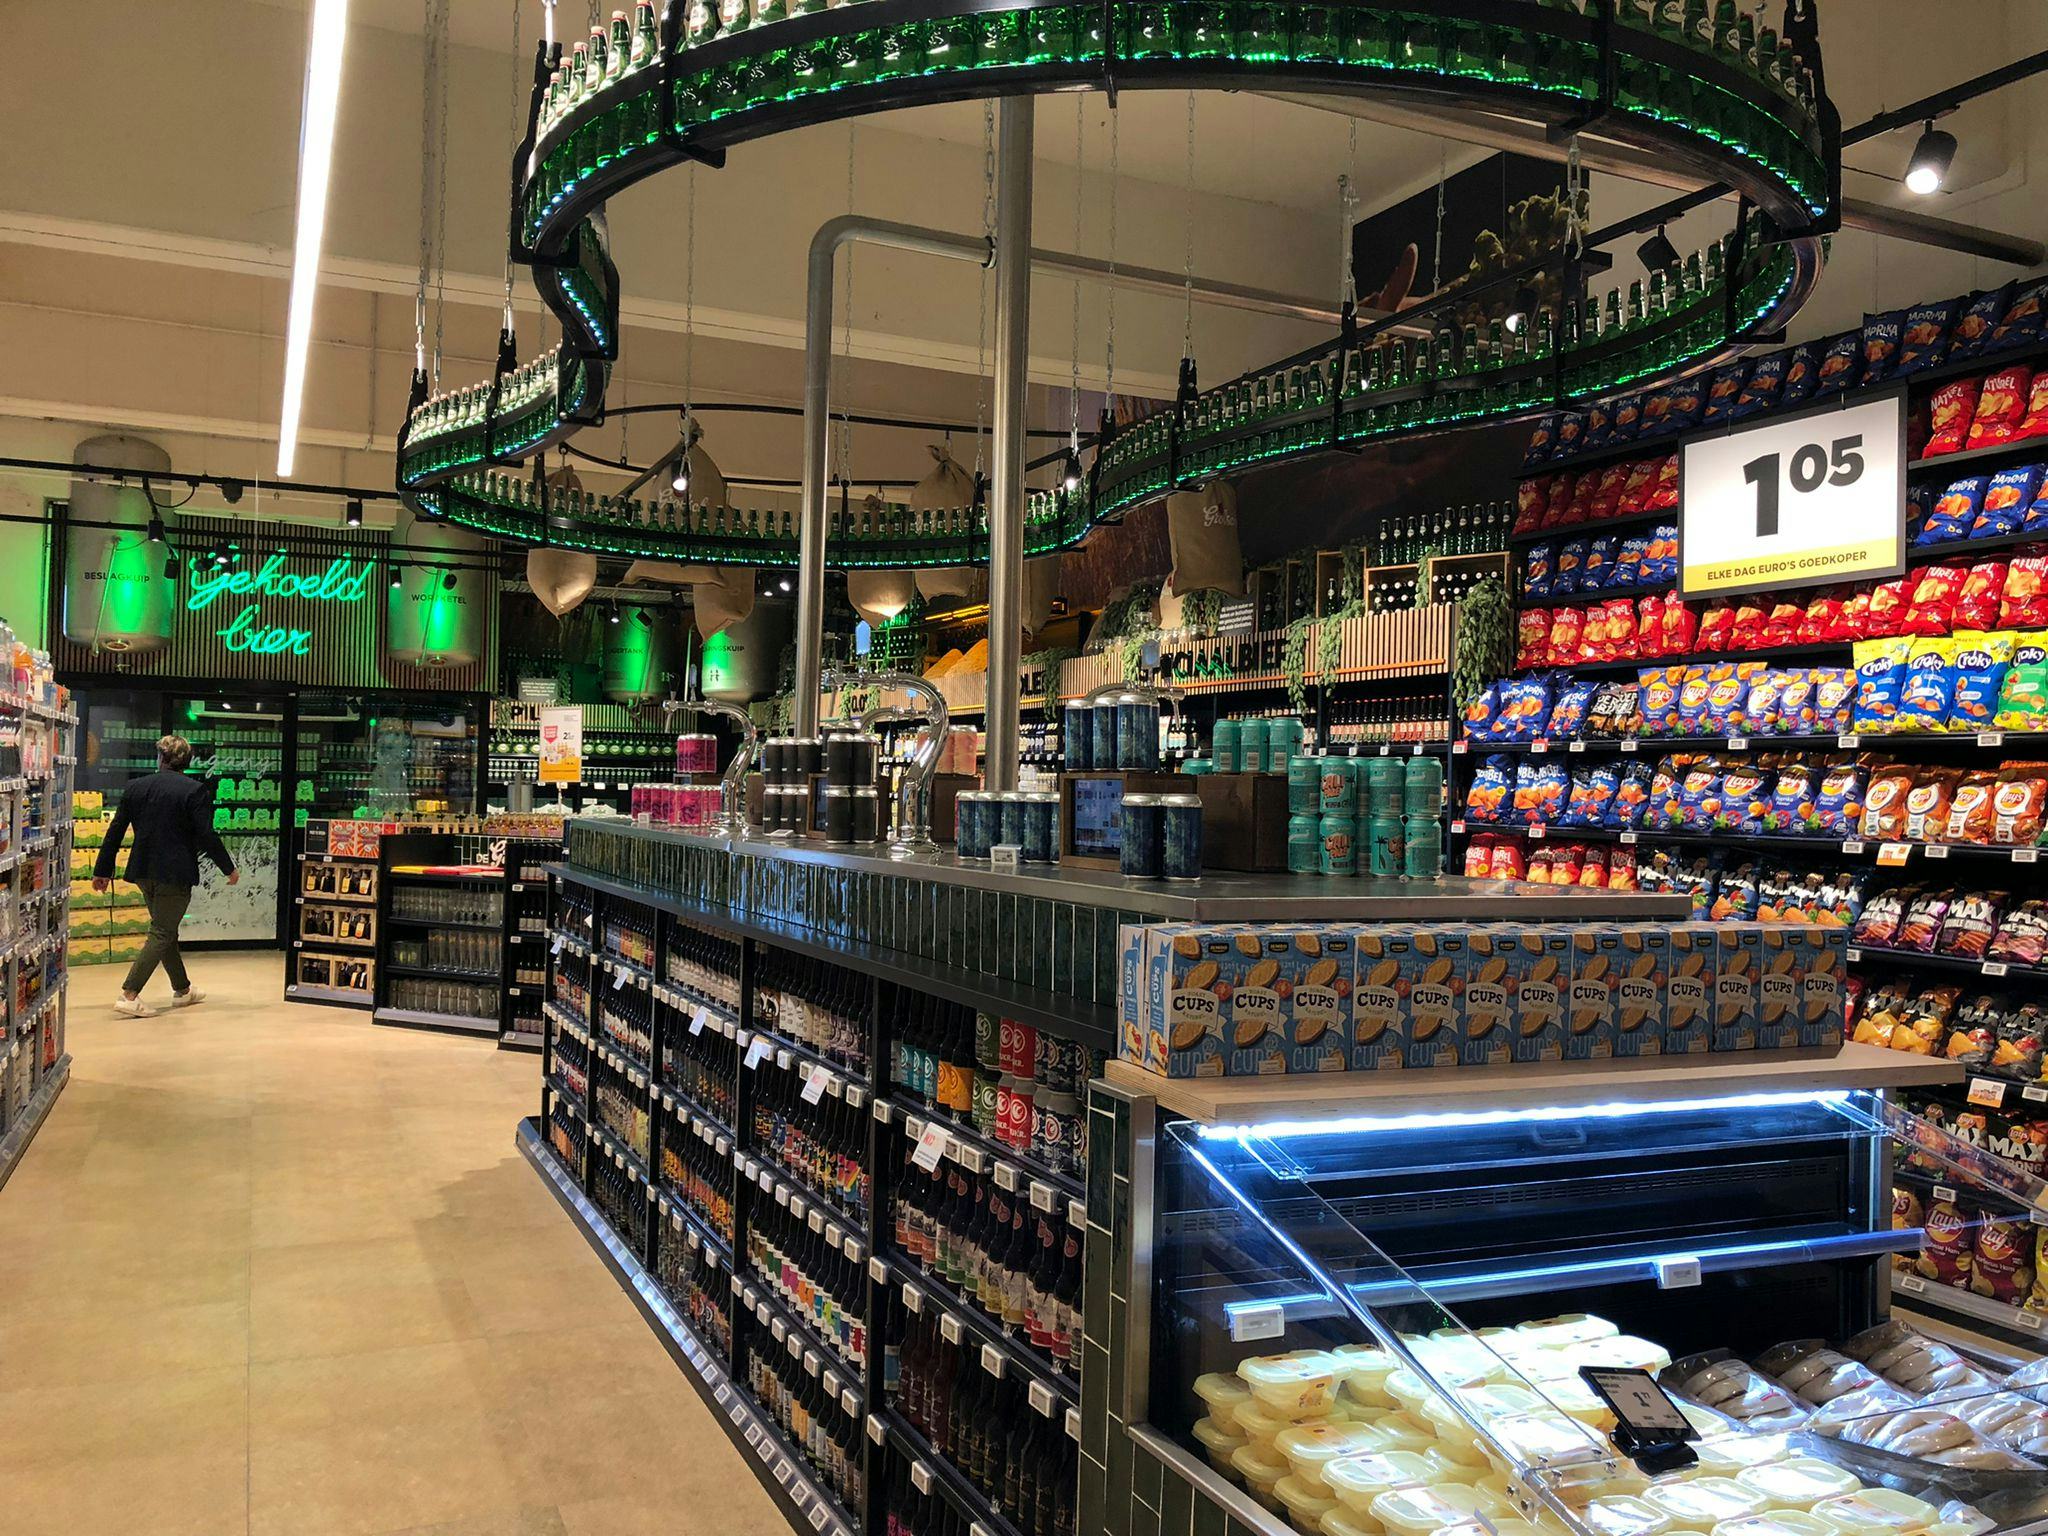 De bierafdeling in de supermarkt. Foto: Distrifood